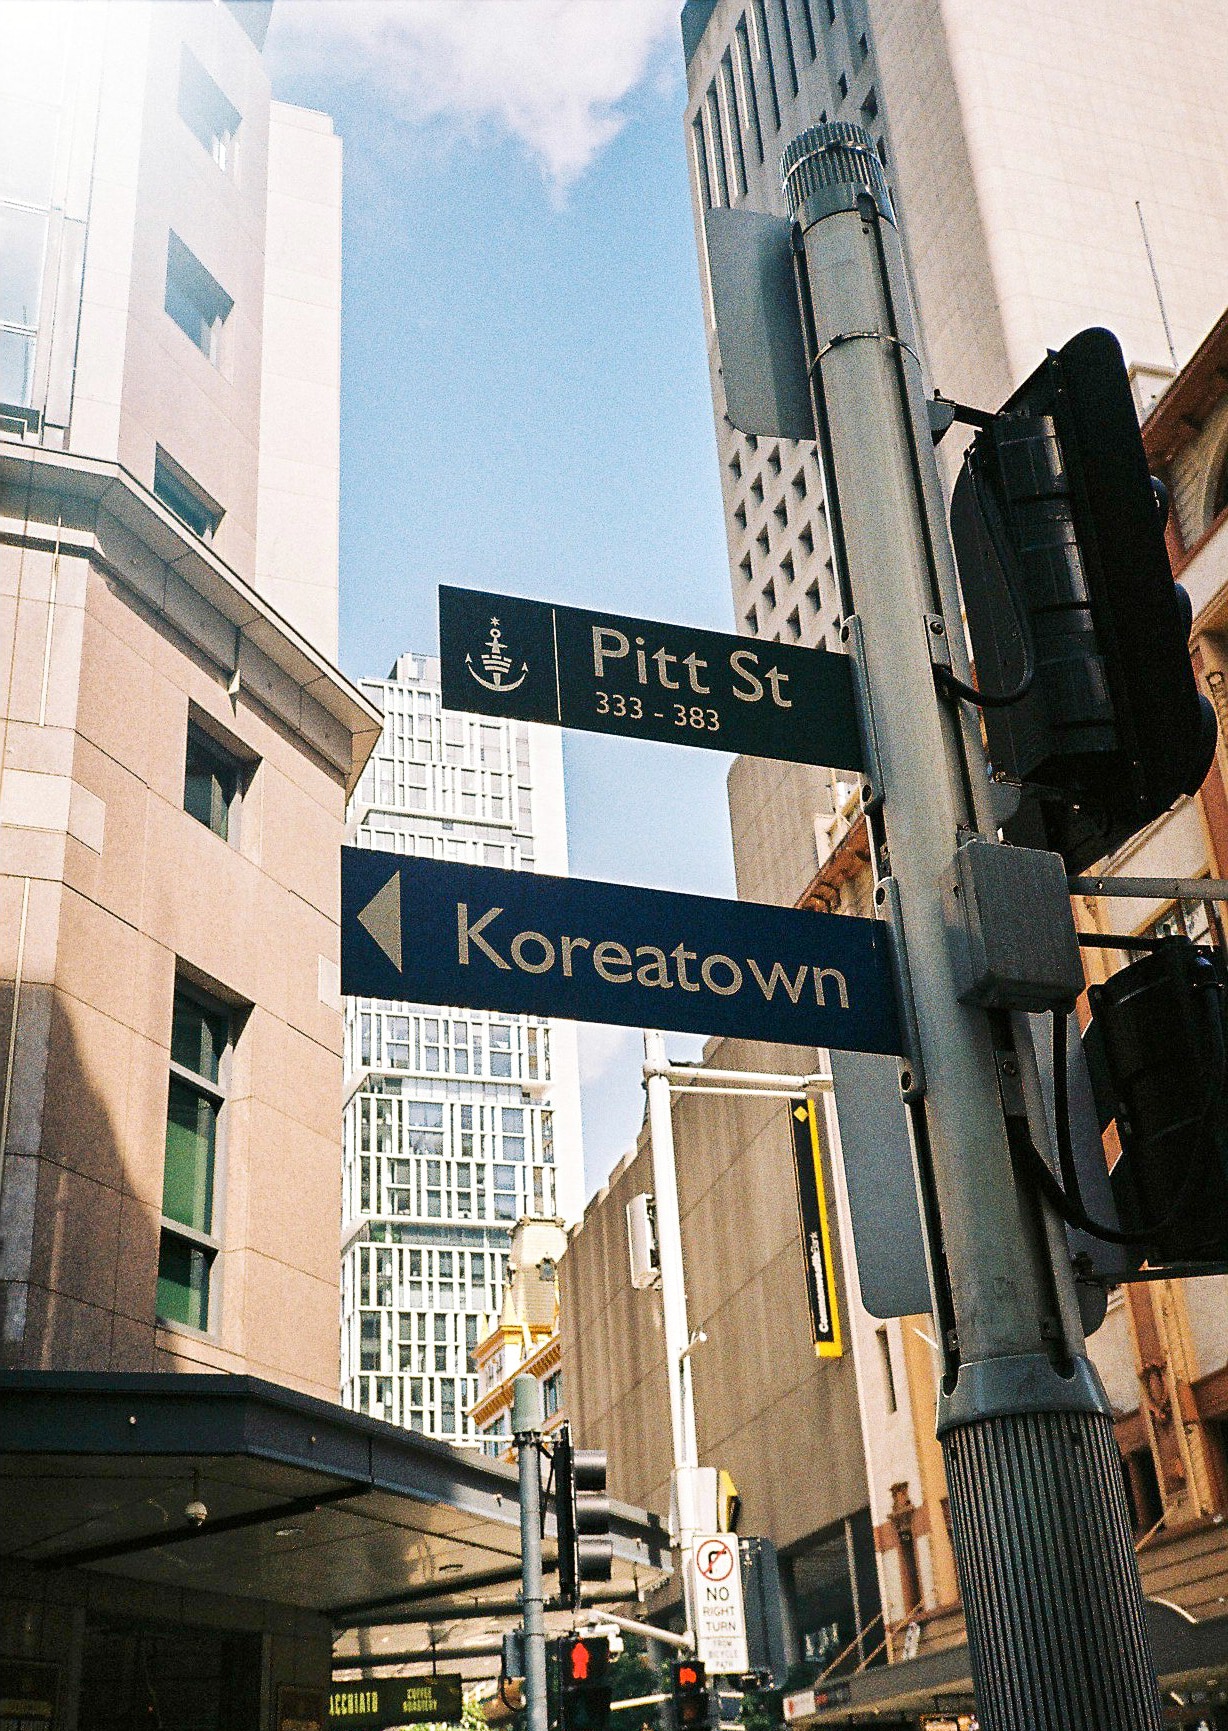 Koreatown in Pitt St, Sydney